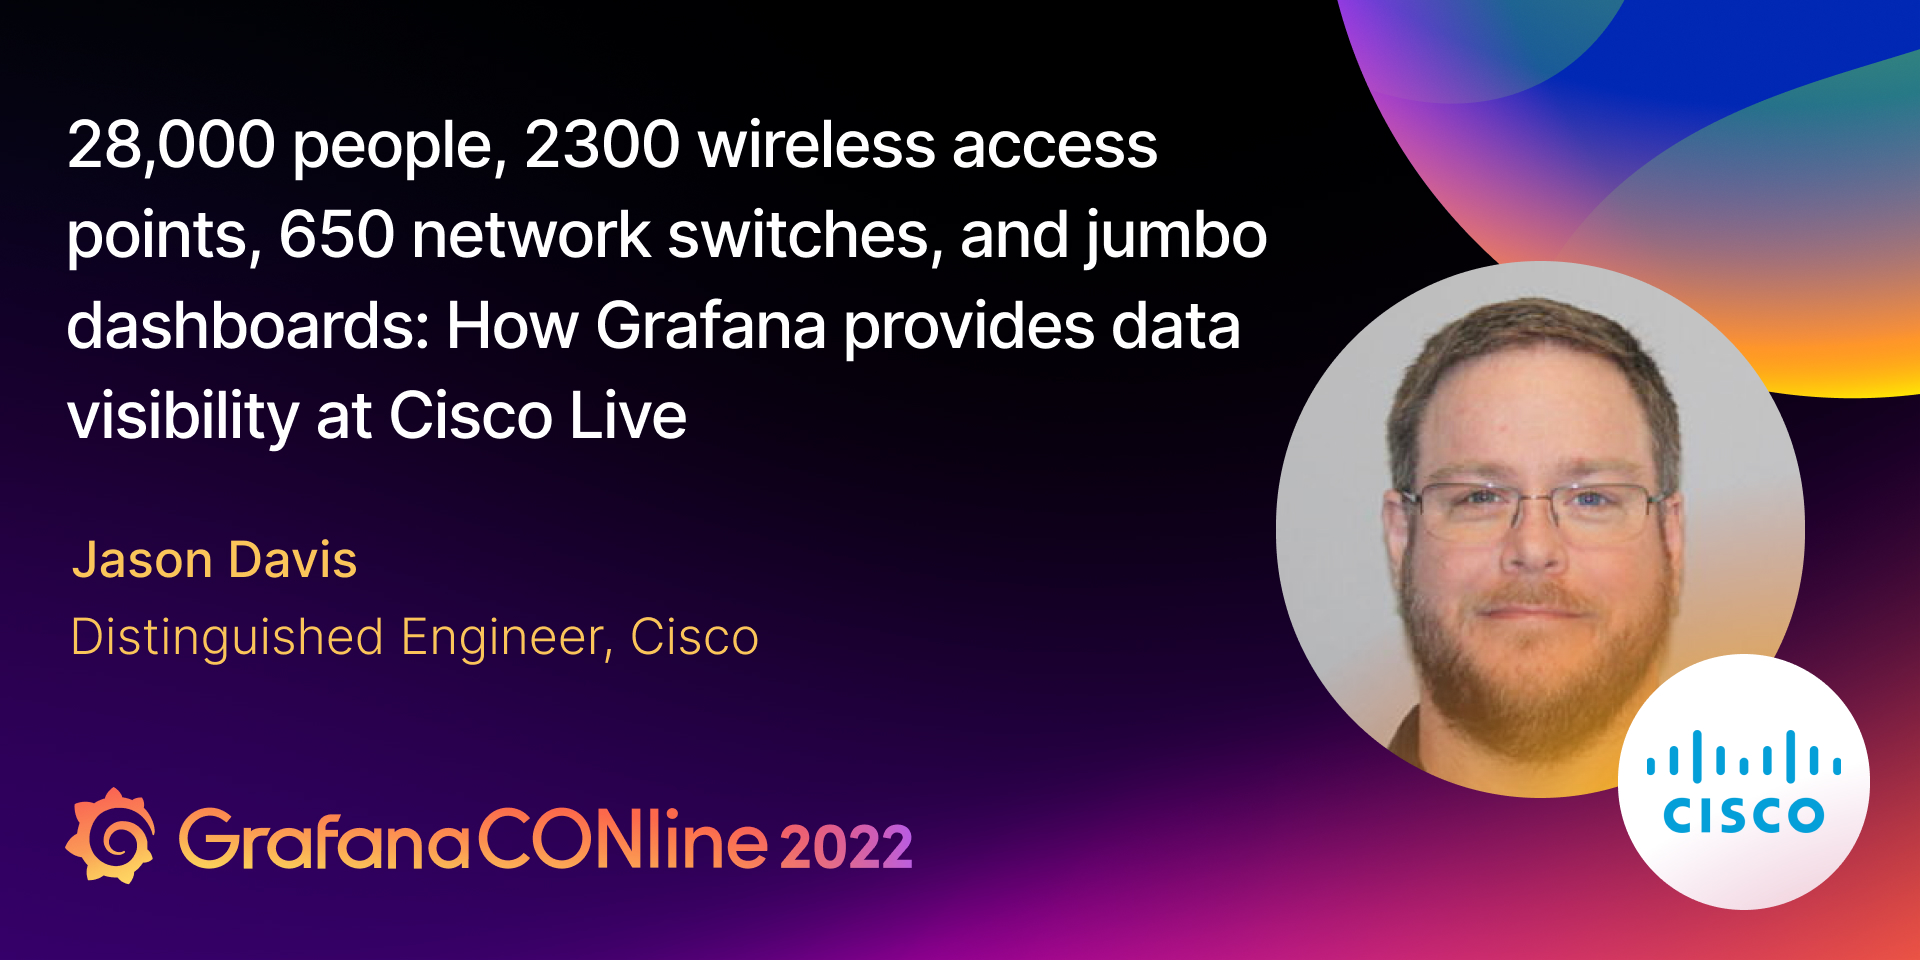 Cisco Live session during GrafanaCONline 2022